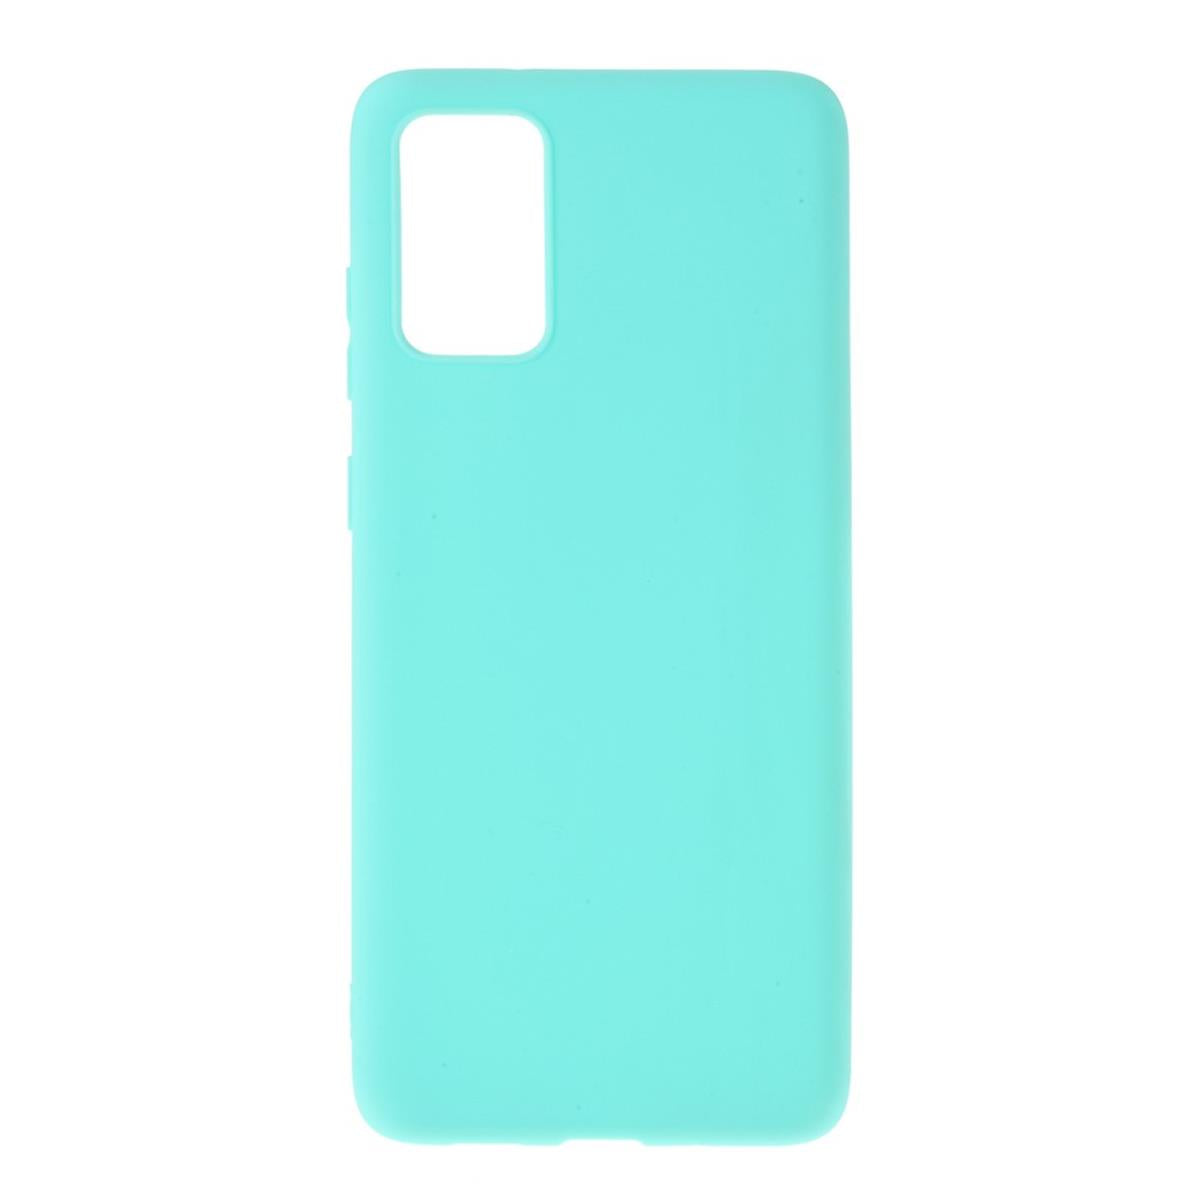 Hülle für Samsung Galaxy S10 Lite Handyhülle Silikon Case Cover Etui Matt Grün